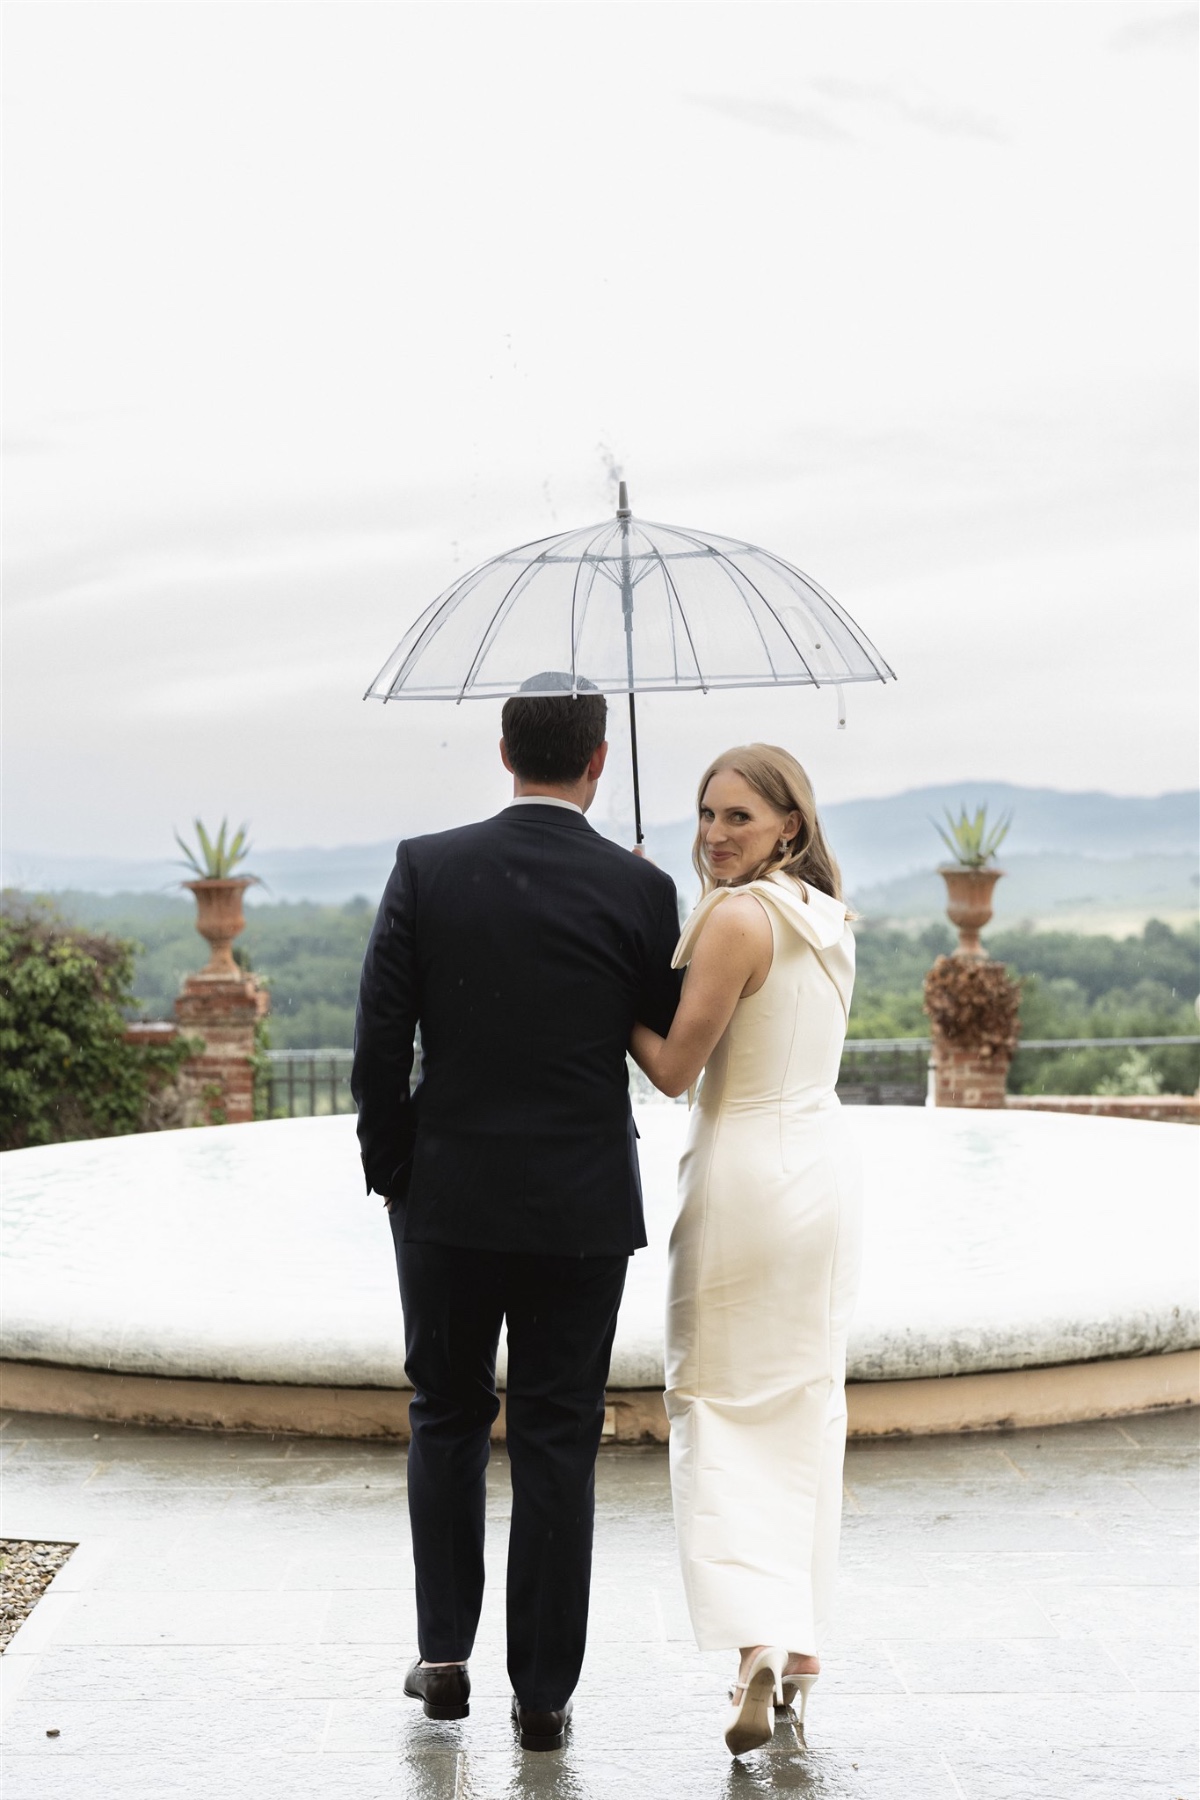 rainy wedding photo ideas